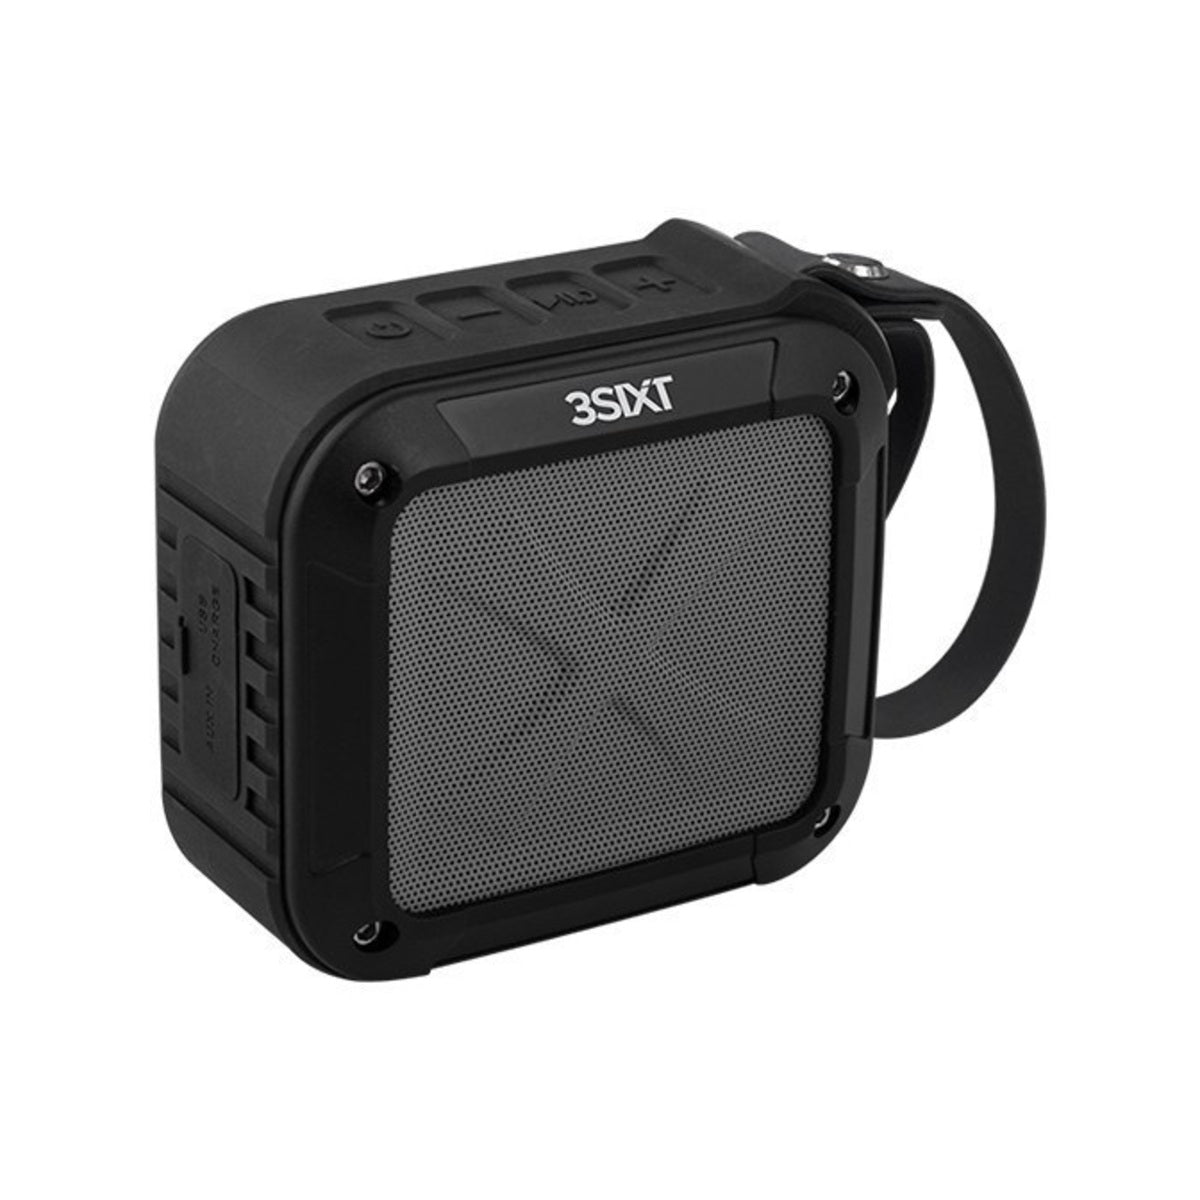 3sixT SoundBlock Wireless IPX6 Speaker - Black.